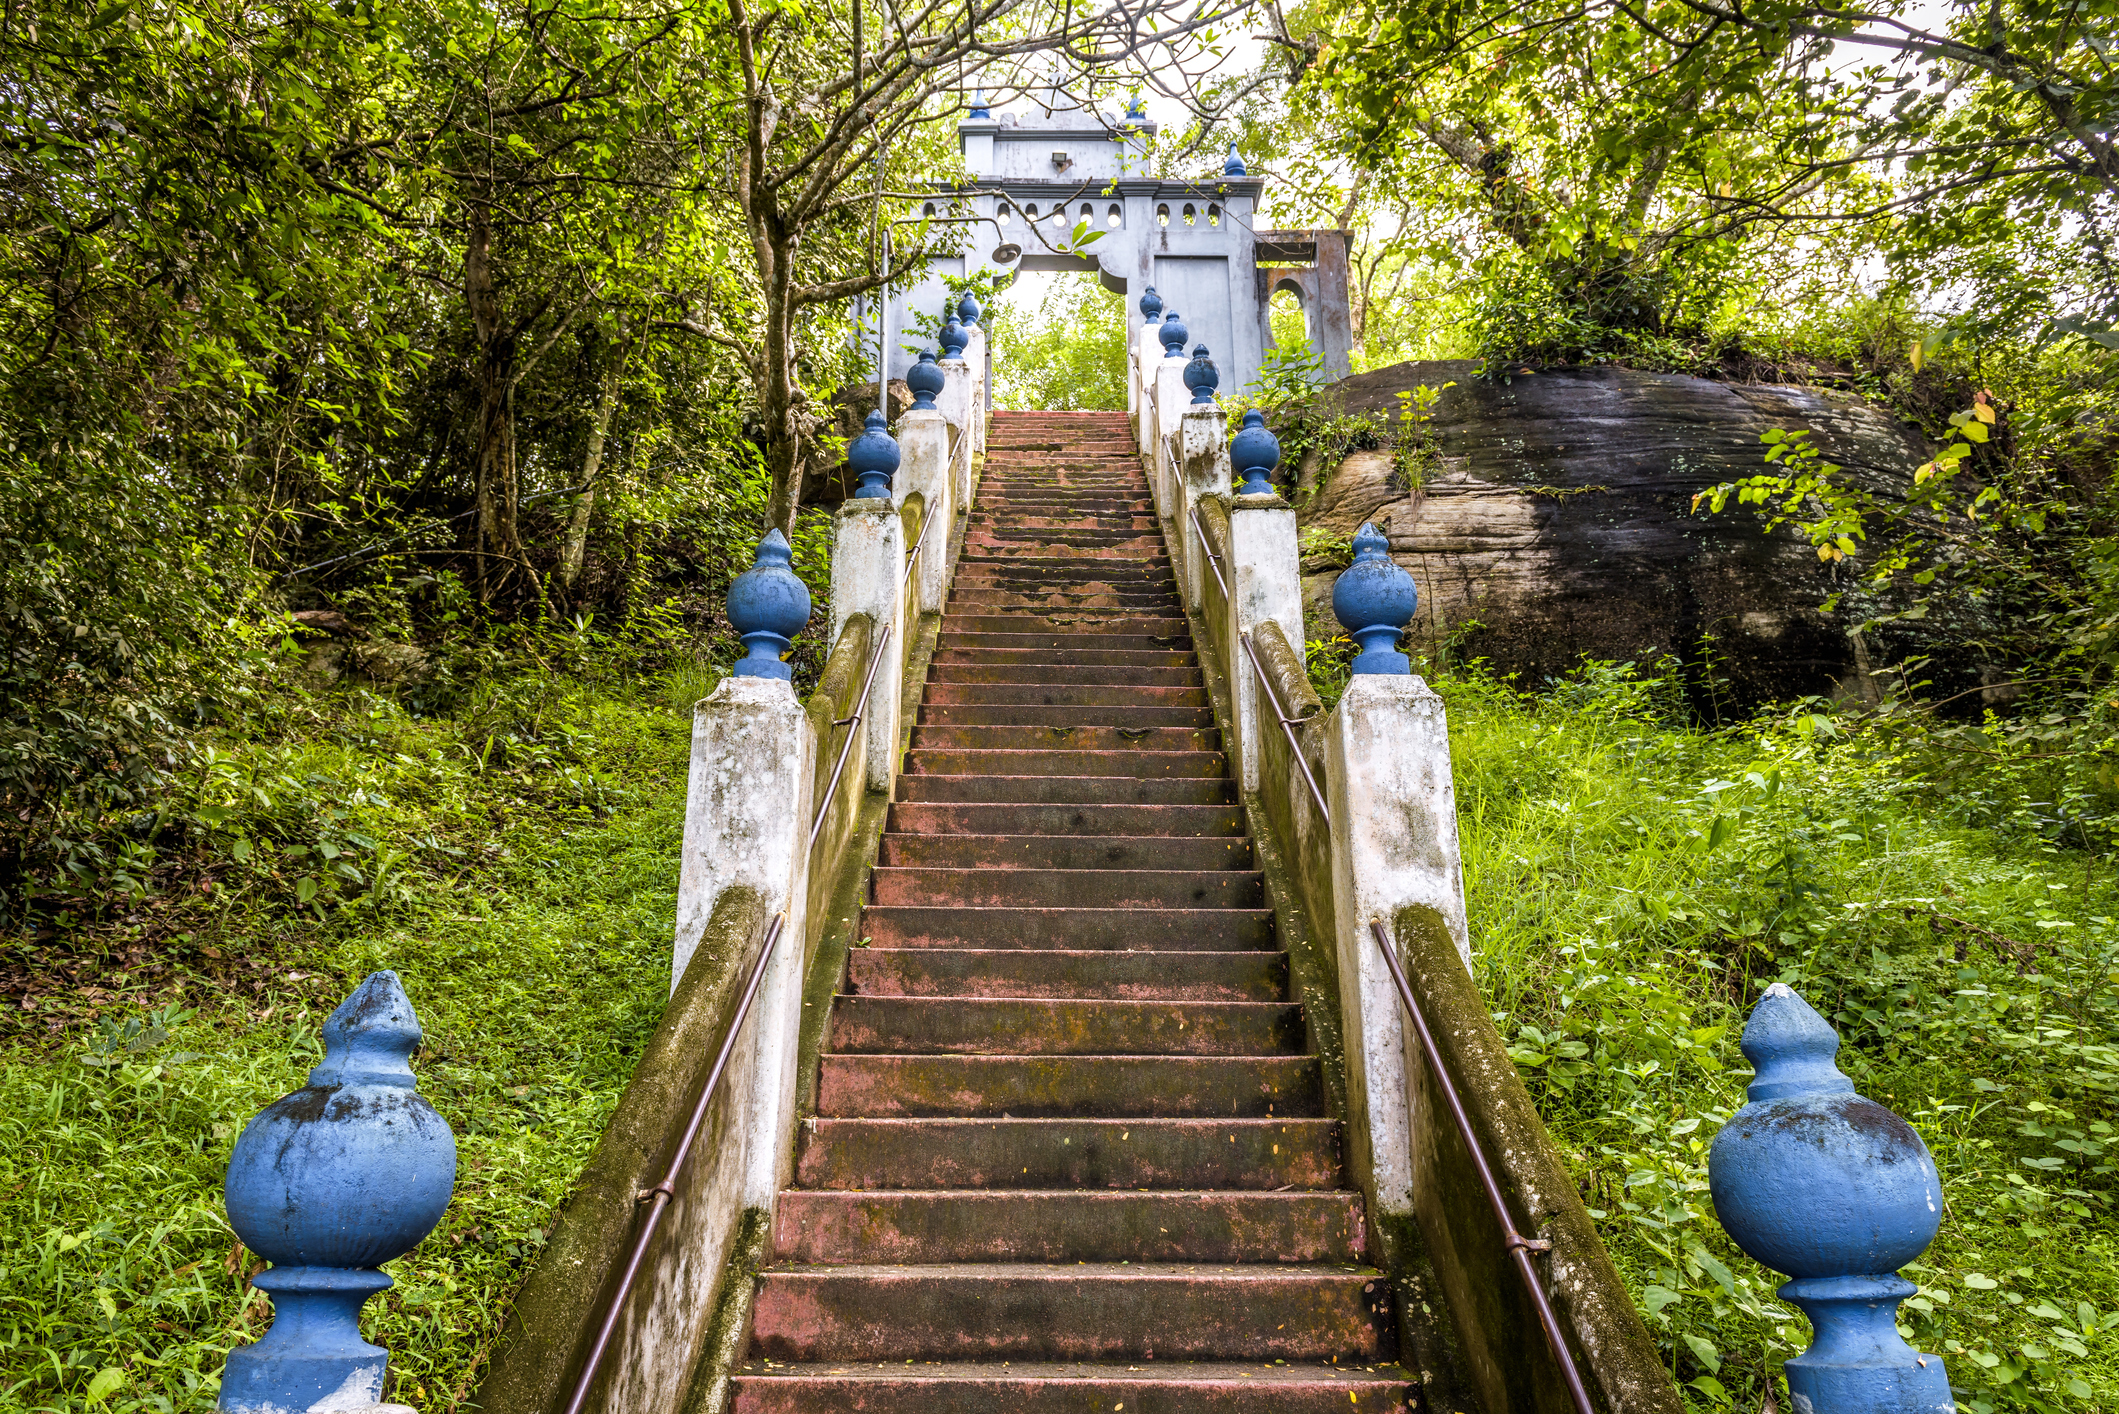 Stairs in ancient Buddhist rock temple in Mulkirigala, Sri Lanka